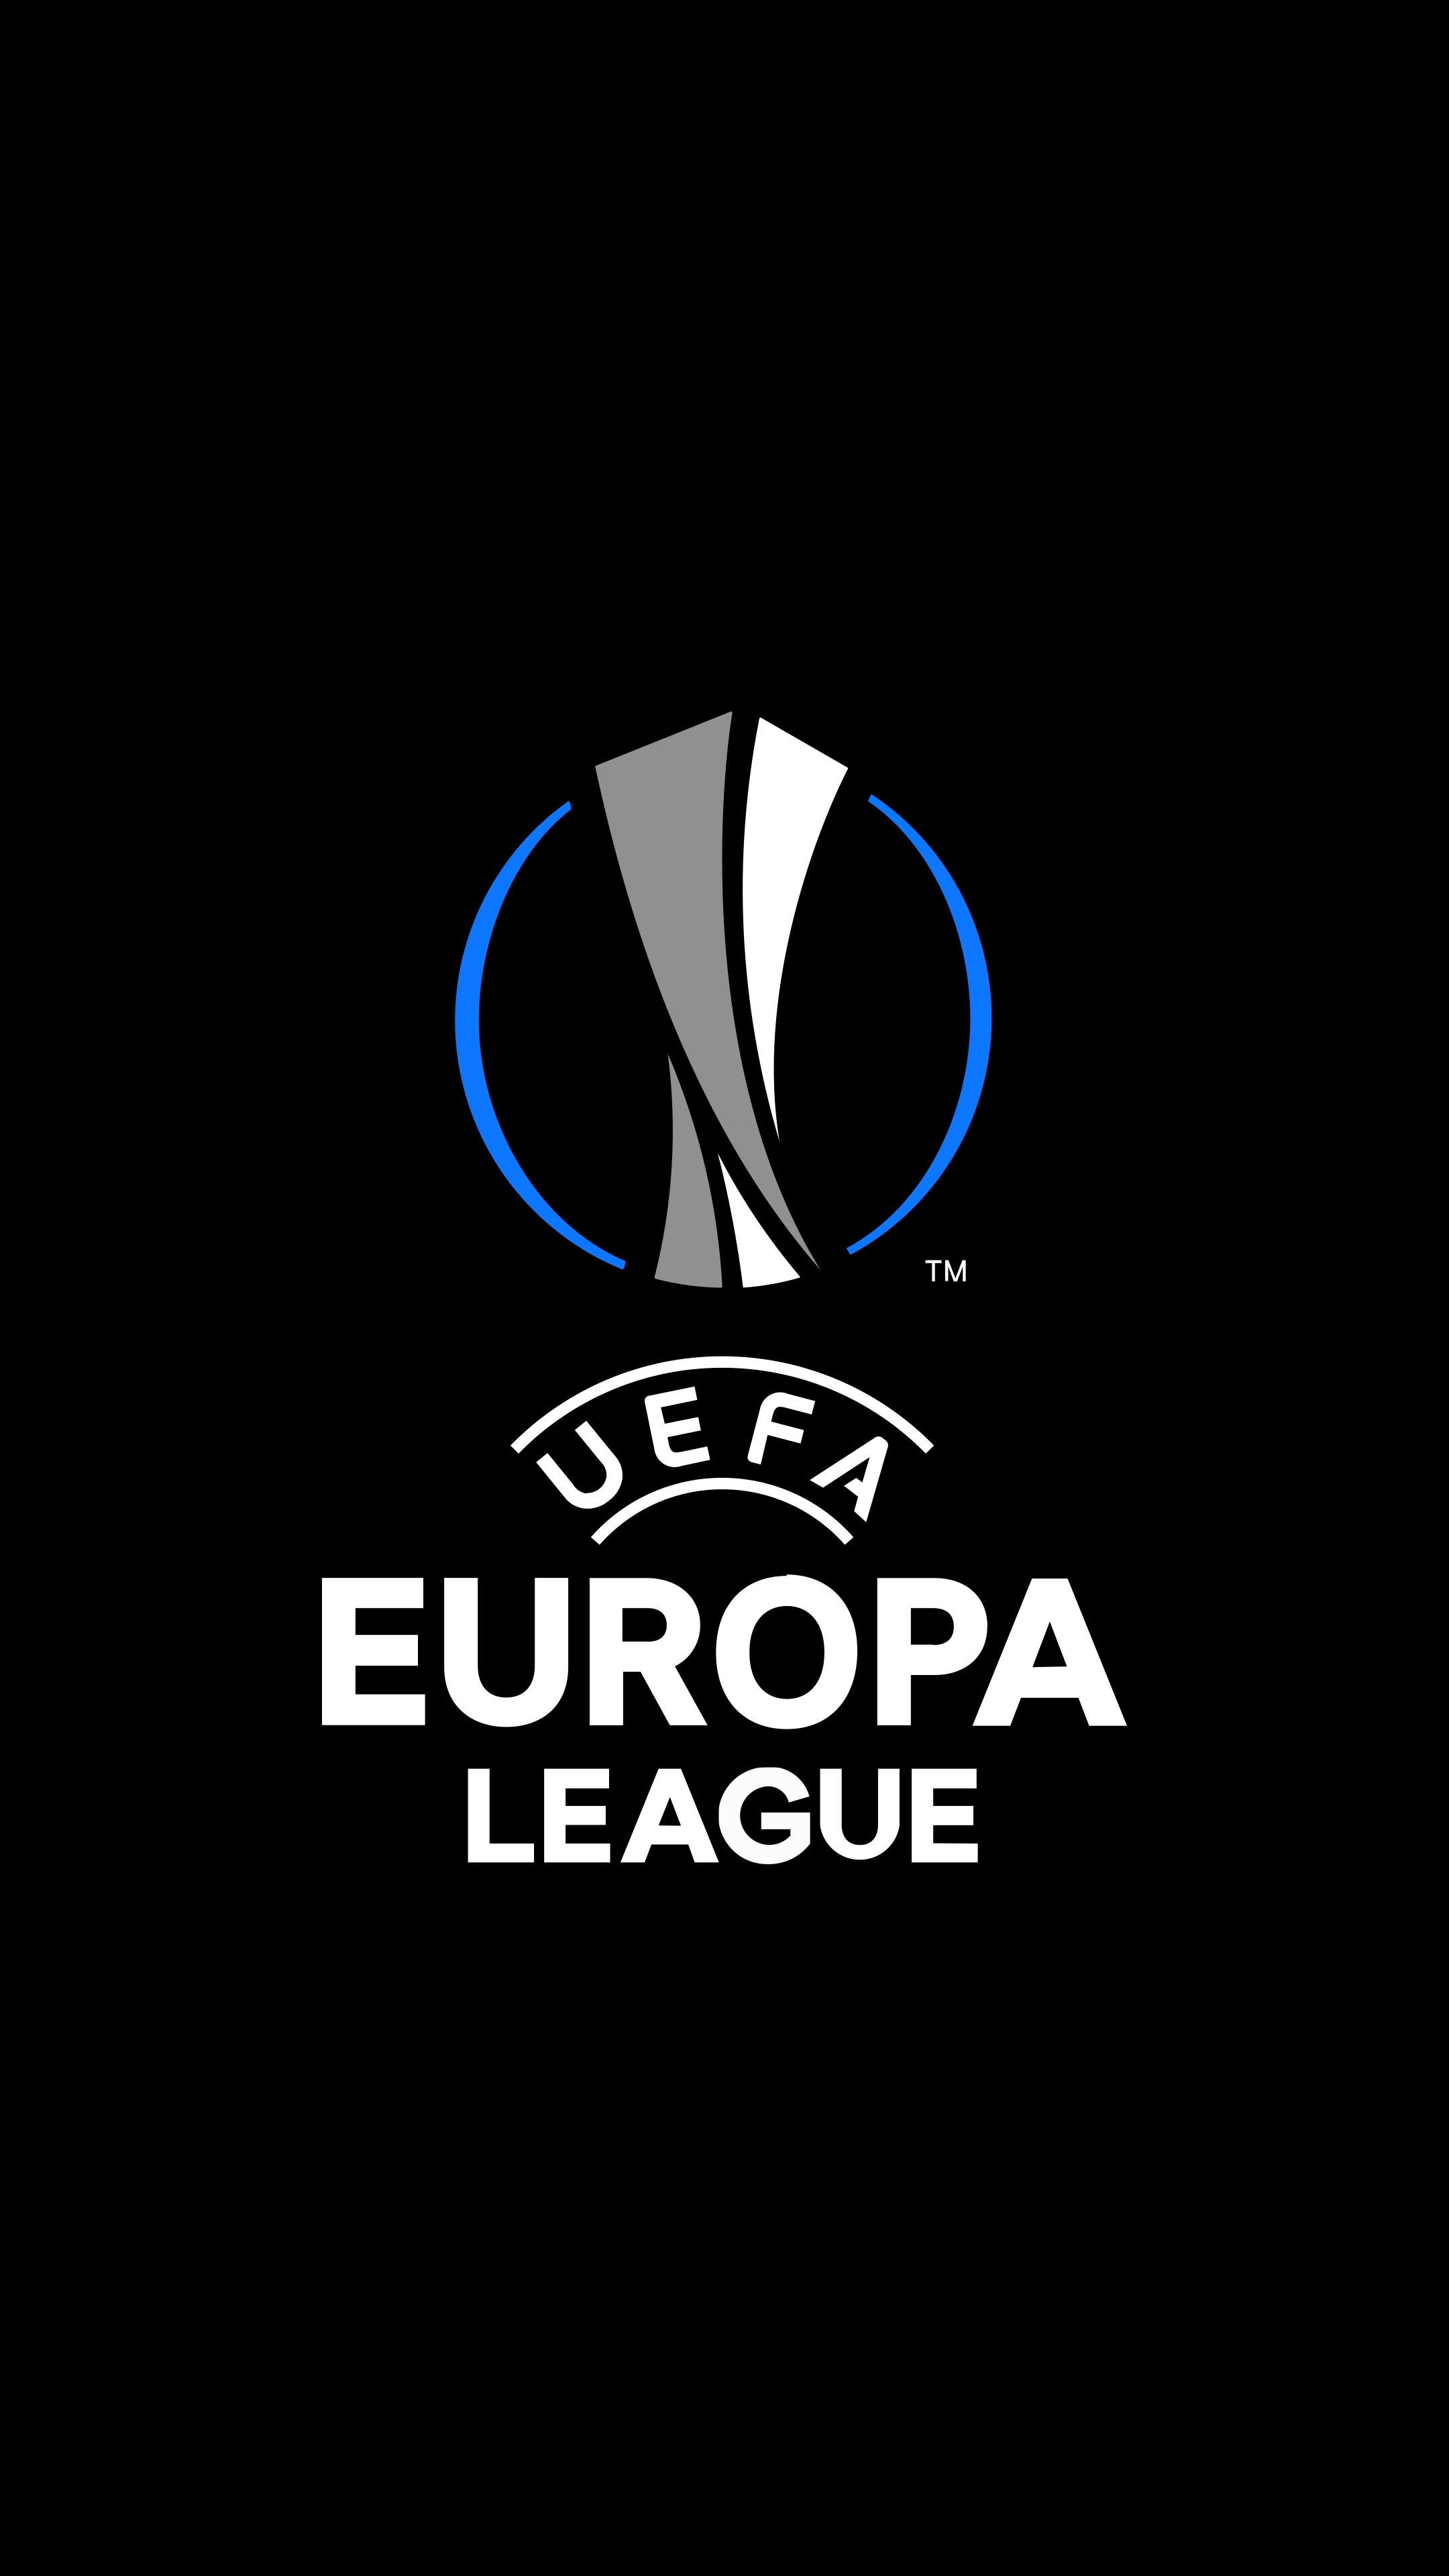 UEFA Europa League 2160p/4K OLED Wallpapers